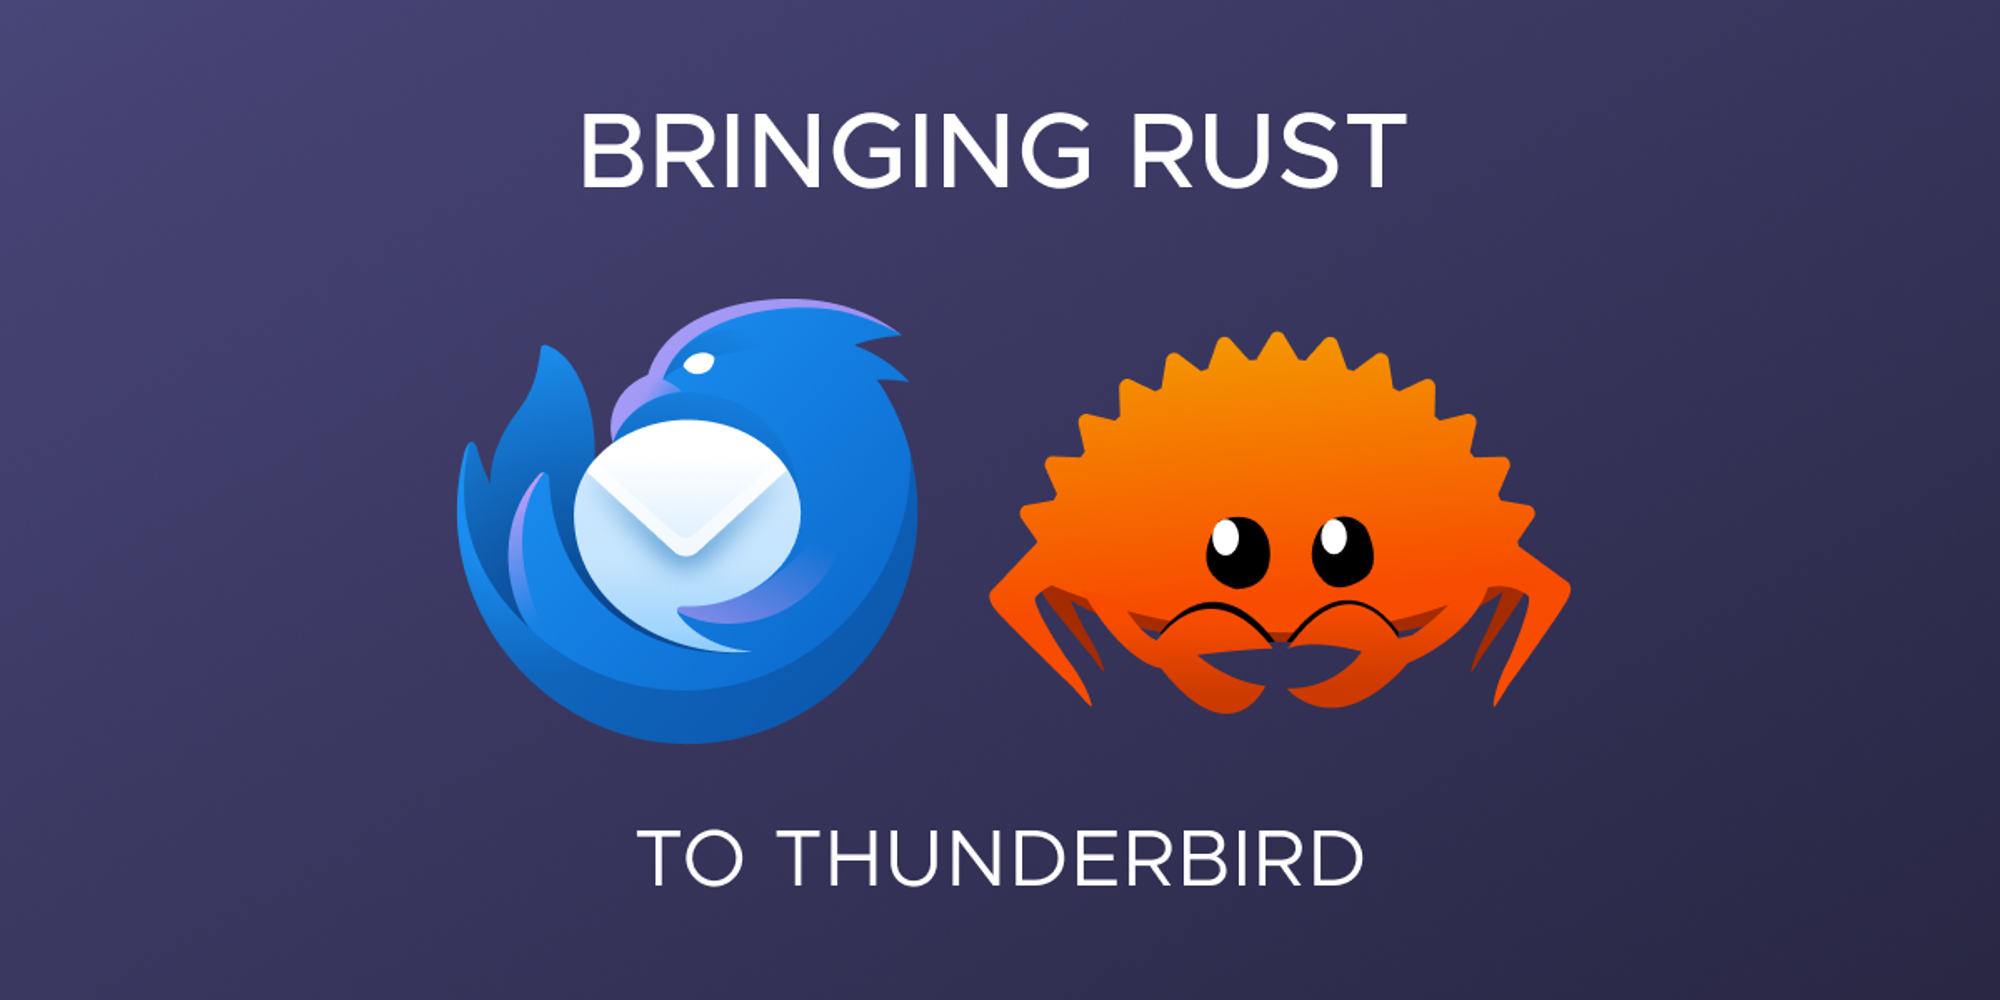 blog.thunderbird.net image